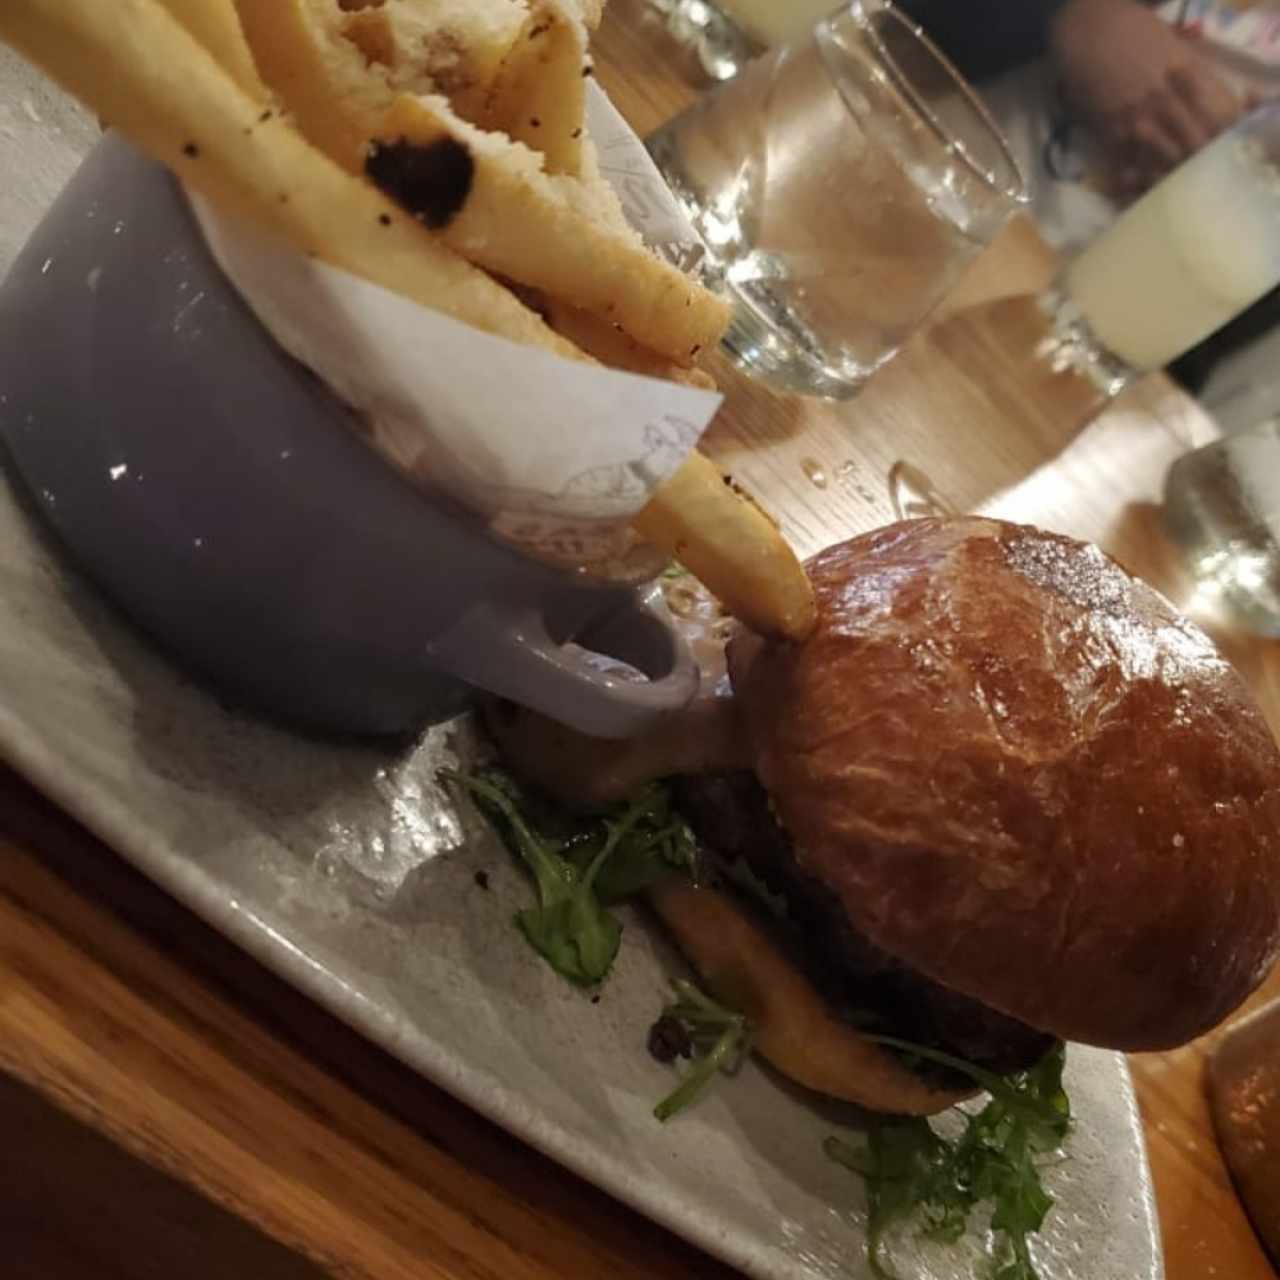 Mushroom burger